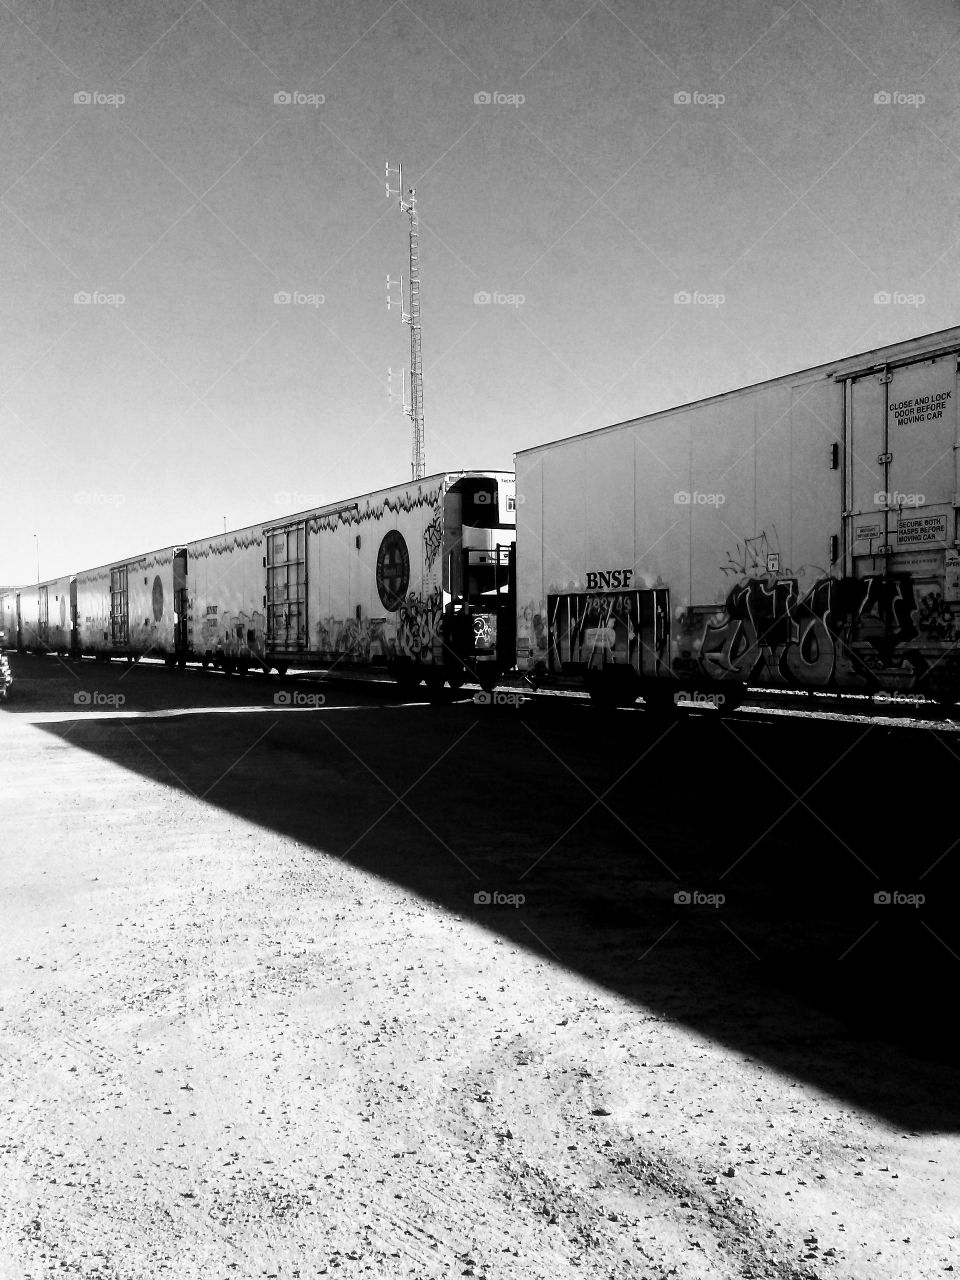 train graffiti black and white